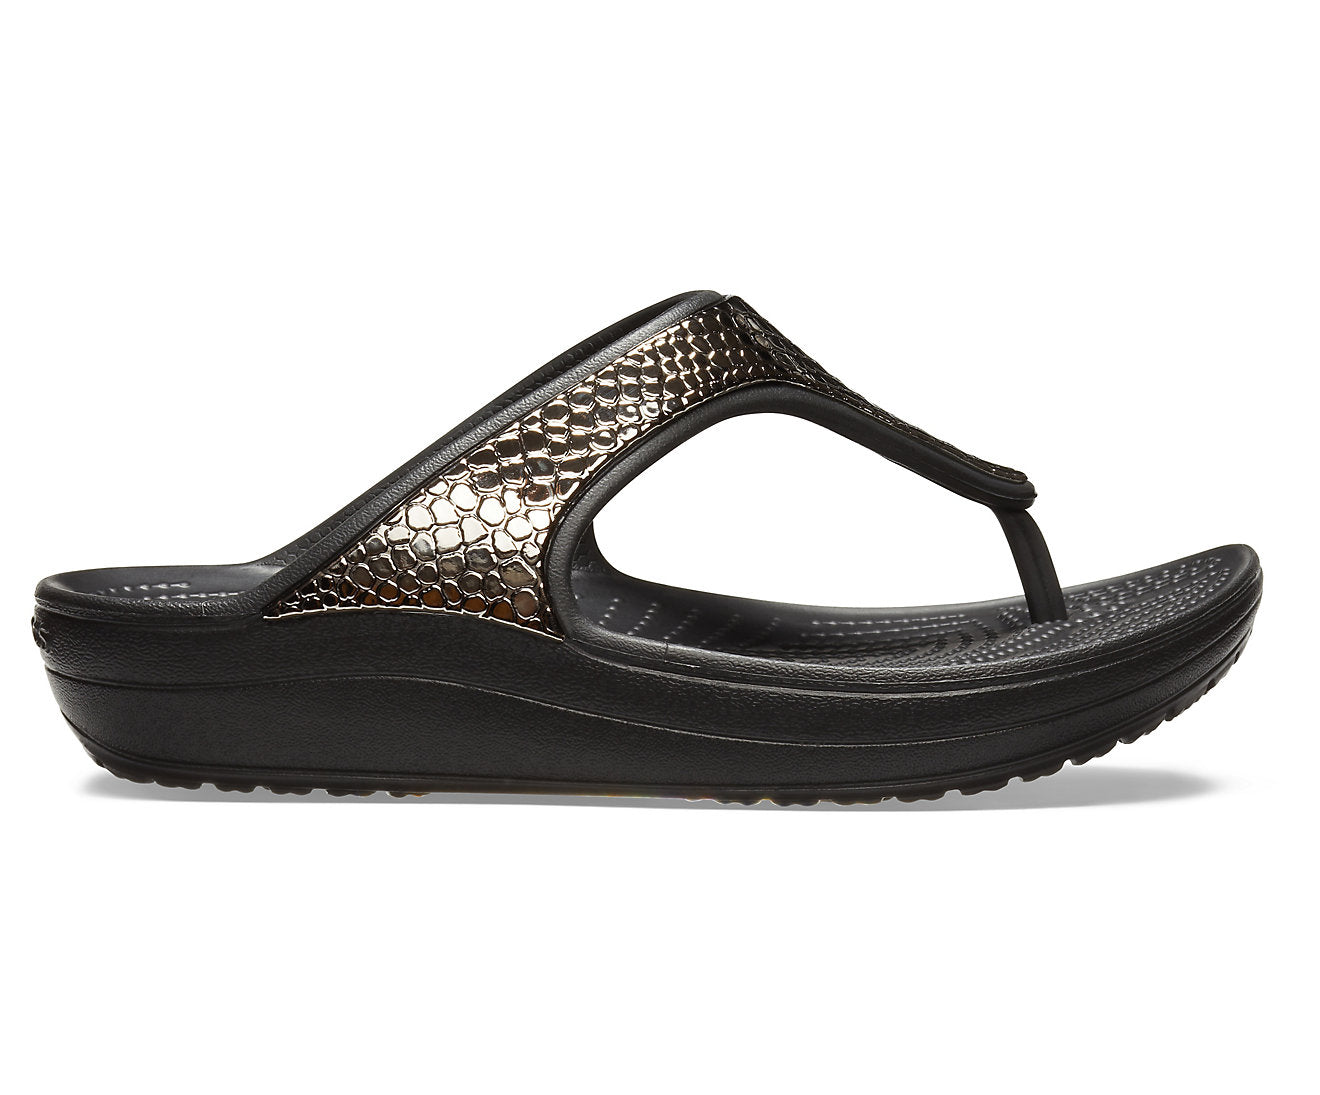 Women’s Crocs Sloane Metallic Texture Flip